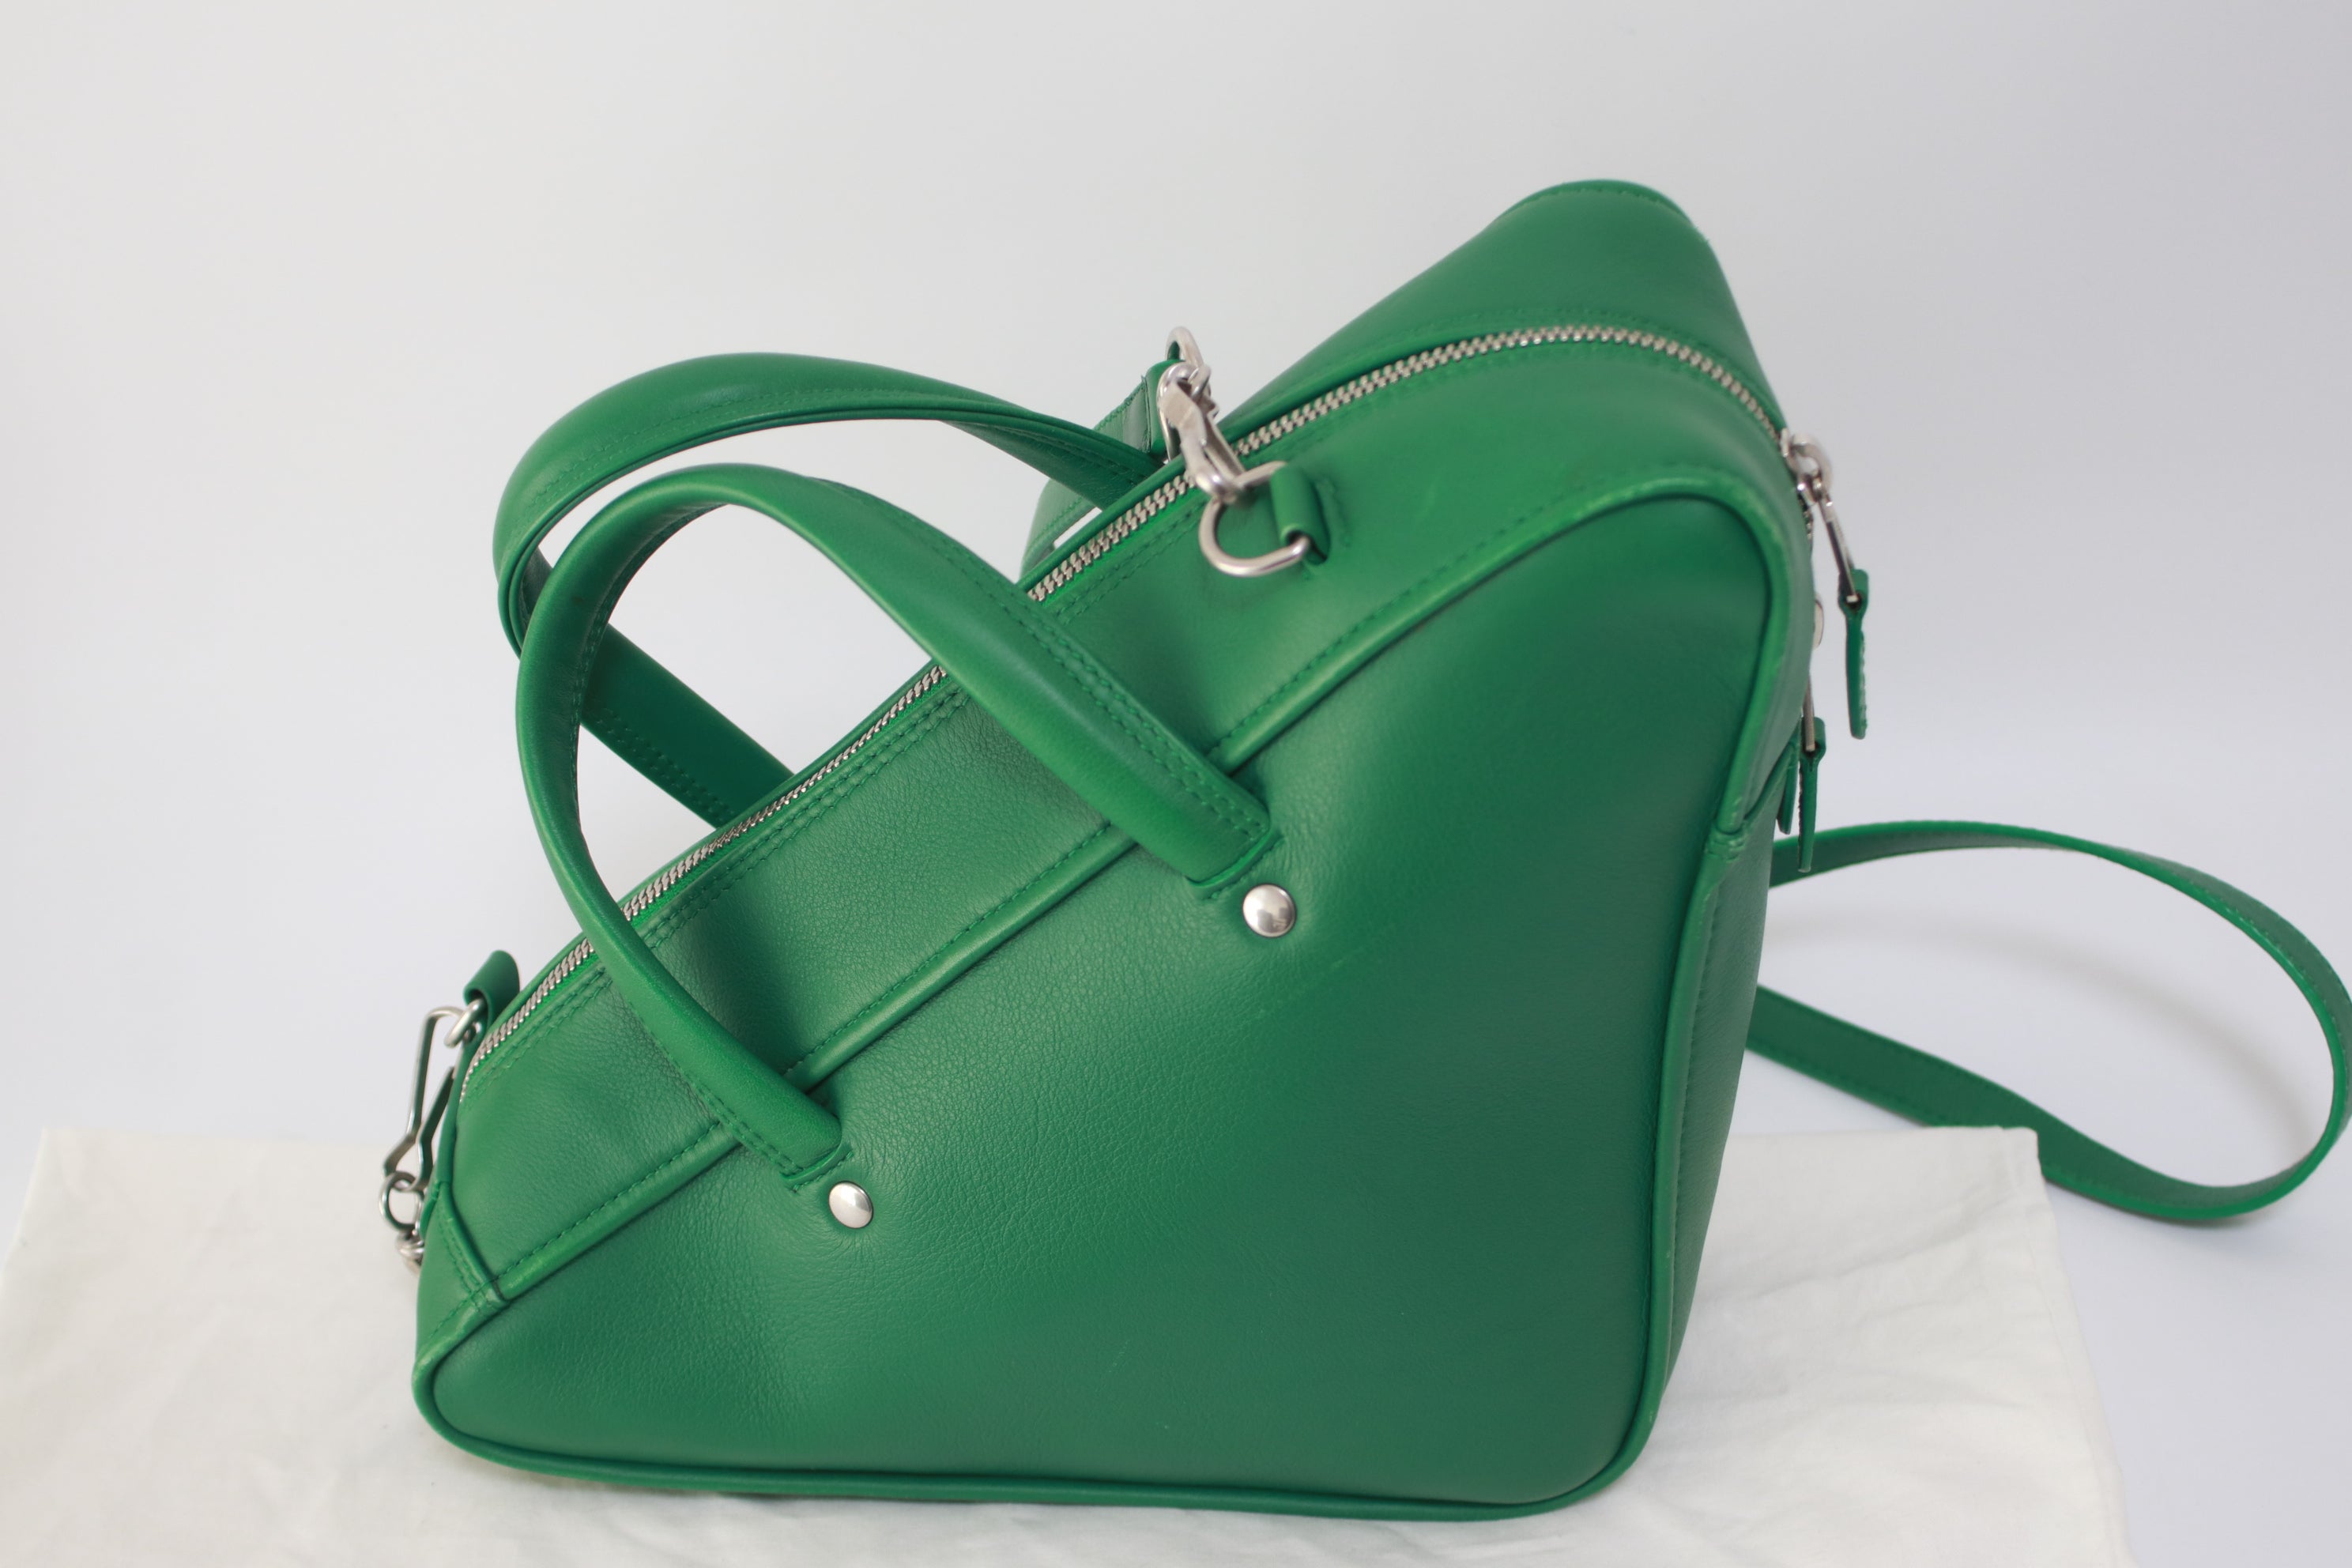 Balenciaga Triangle Shoulder Bag Green Used (7229)